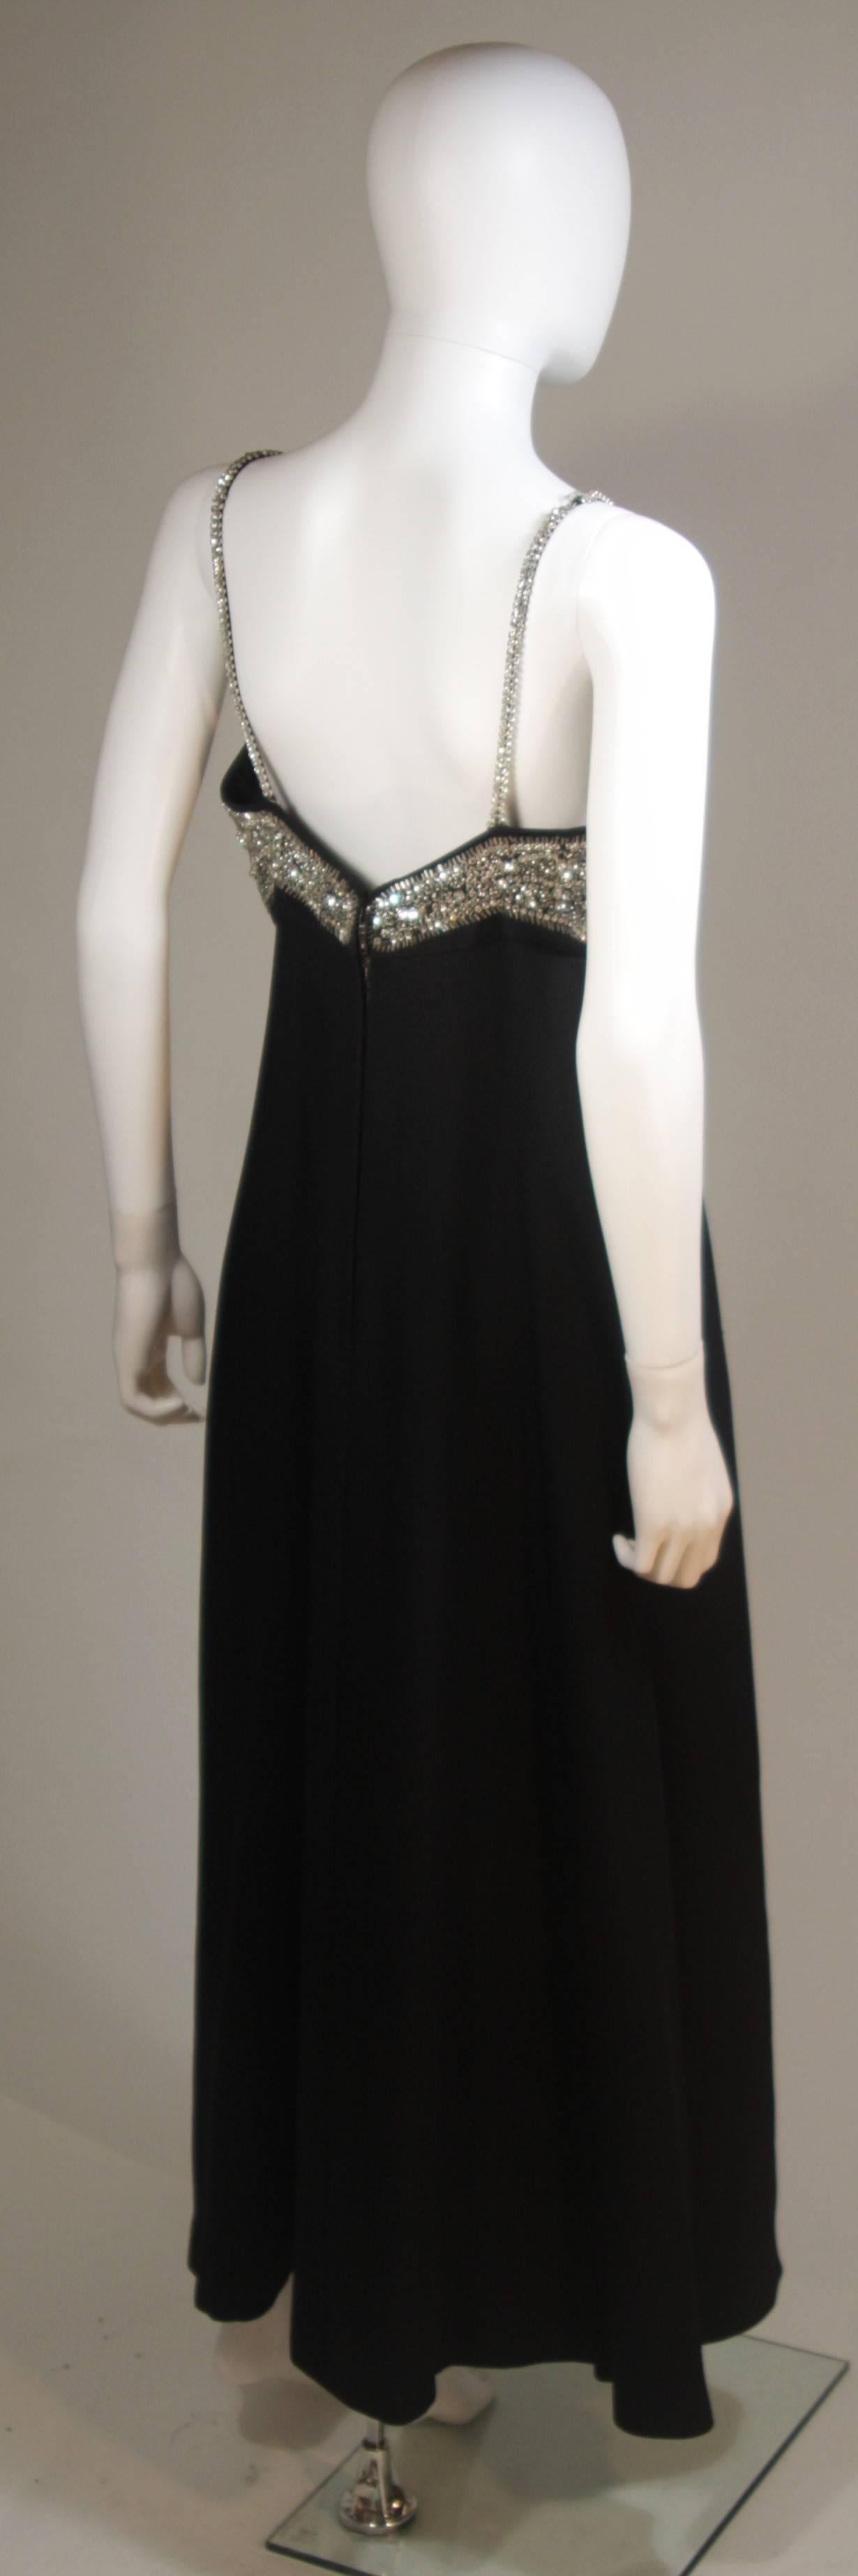 Vintage Custom Black Jewel Encrusted Gown Size 8-10 For Sale 2